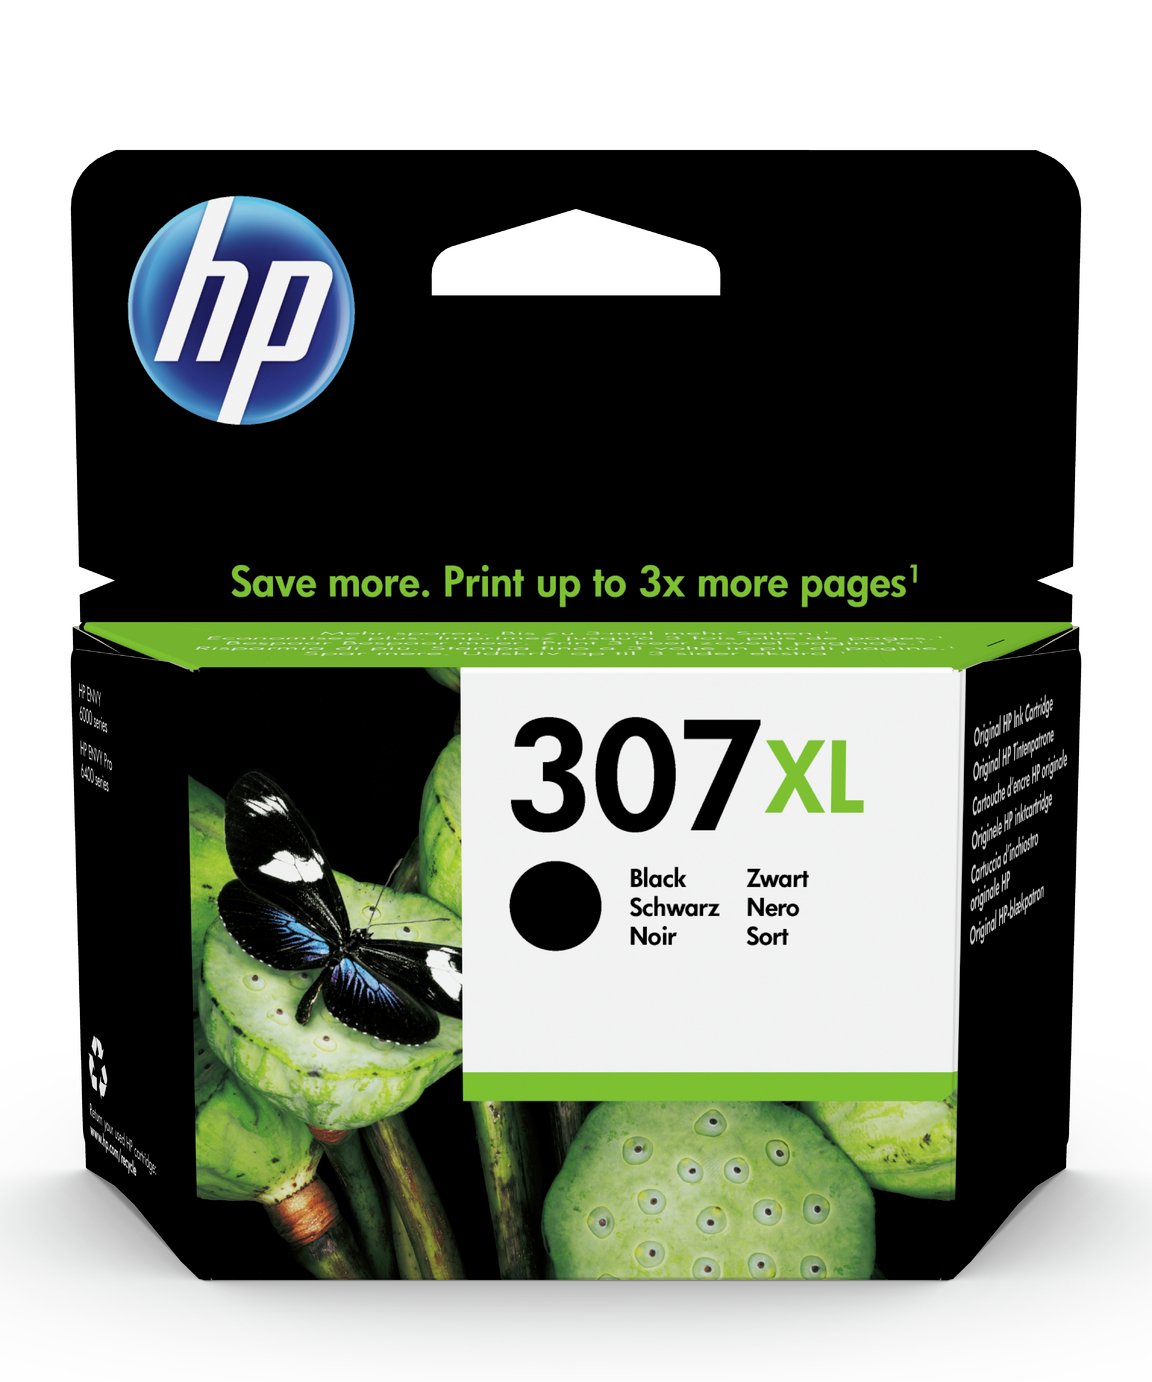 HP 307XL High-Yield Original Ink Cartridge Review